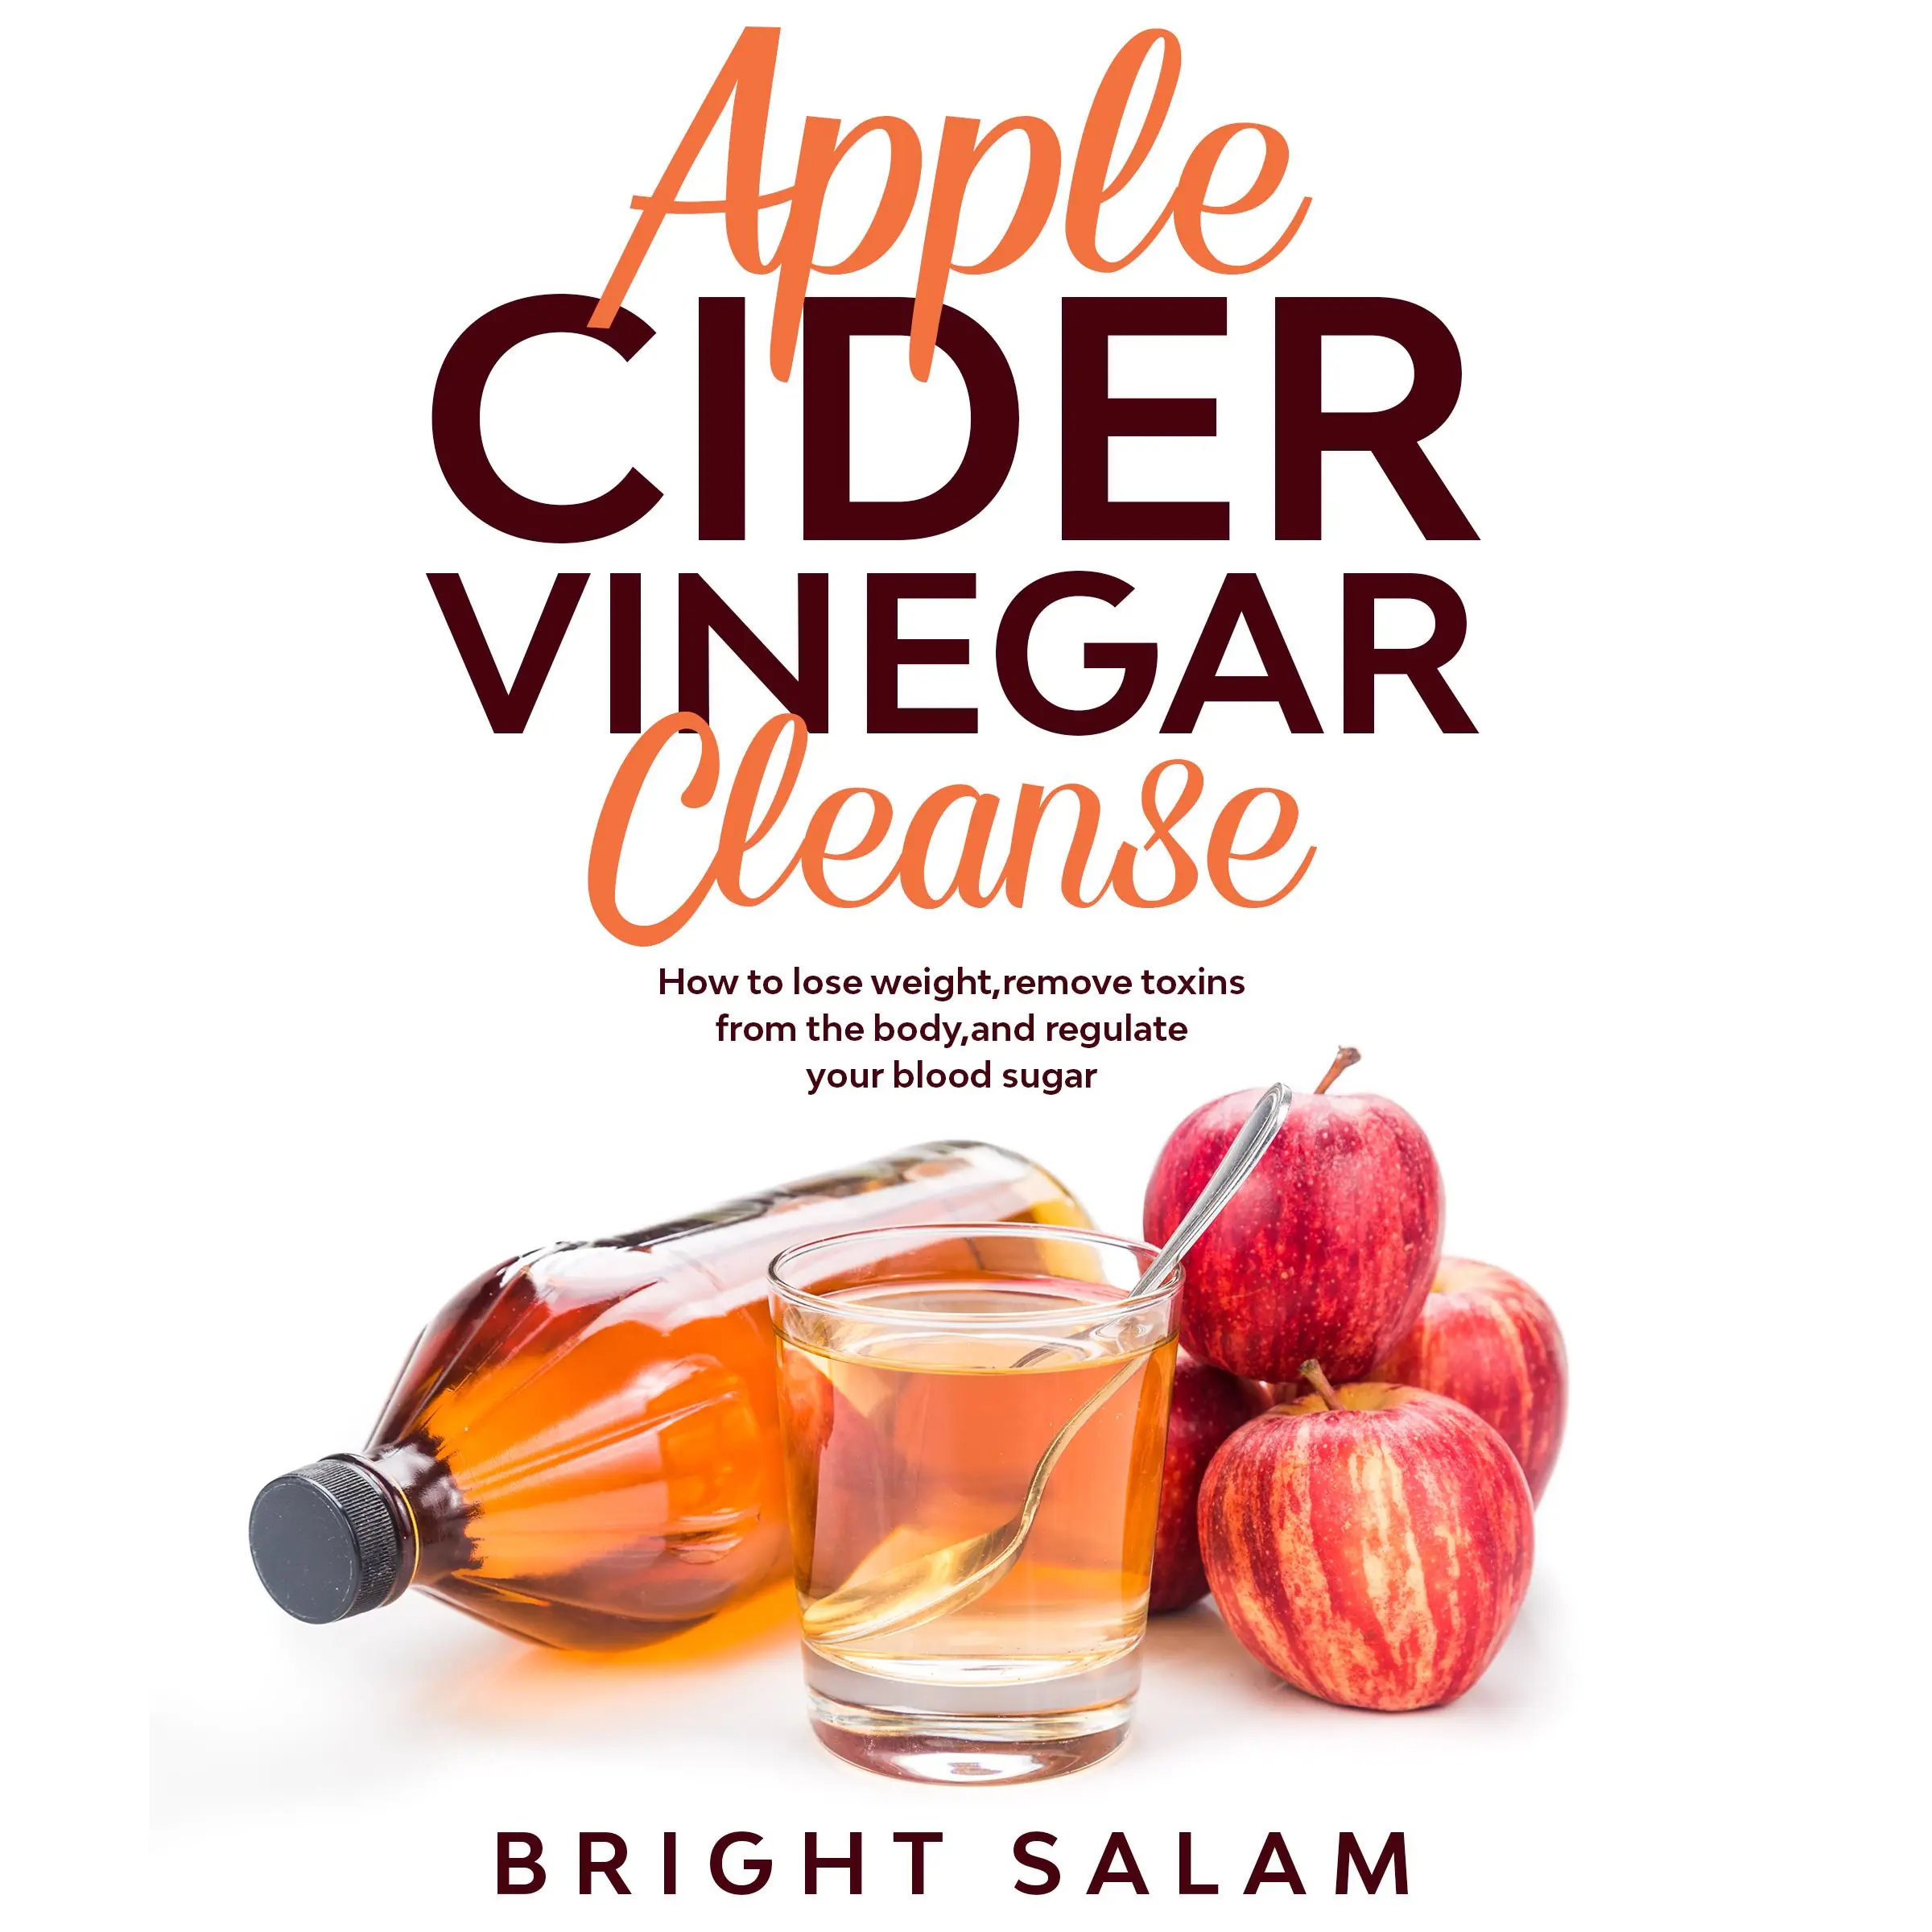 Apple cider vinegar cleanse Audiobook by Bright Salam